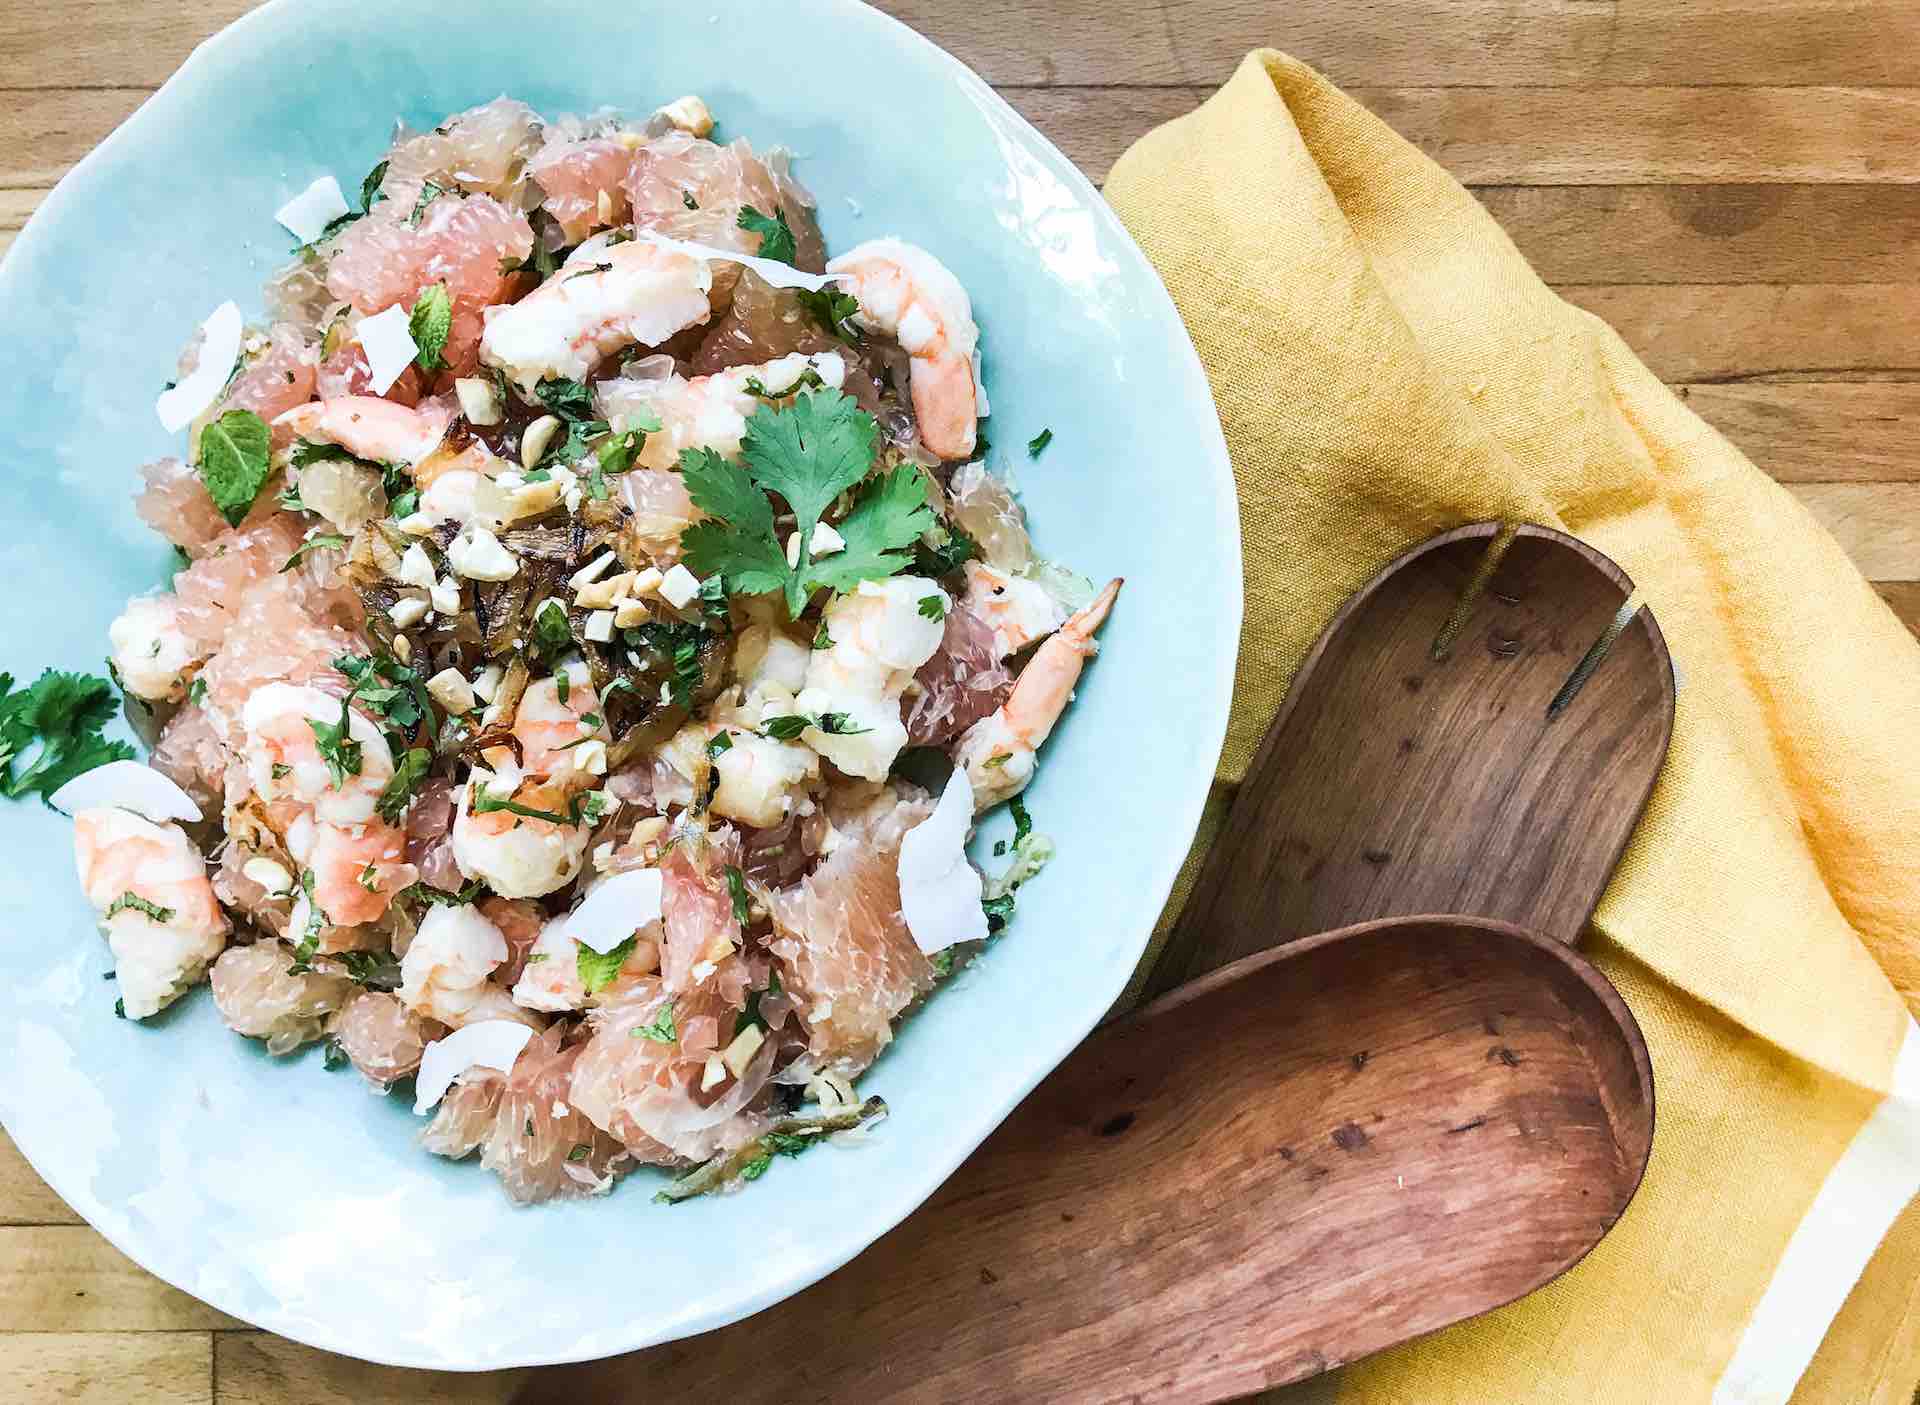 Plate with Pomelo shrimp salad good for body detox